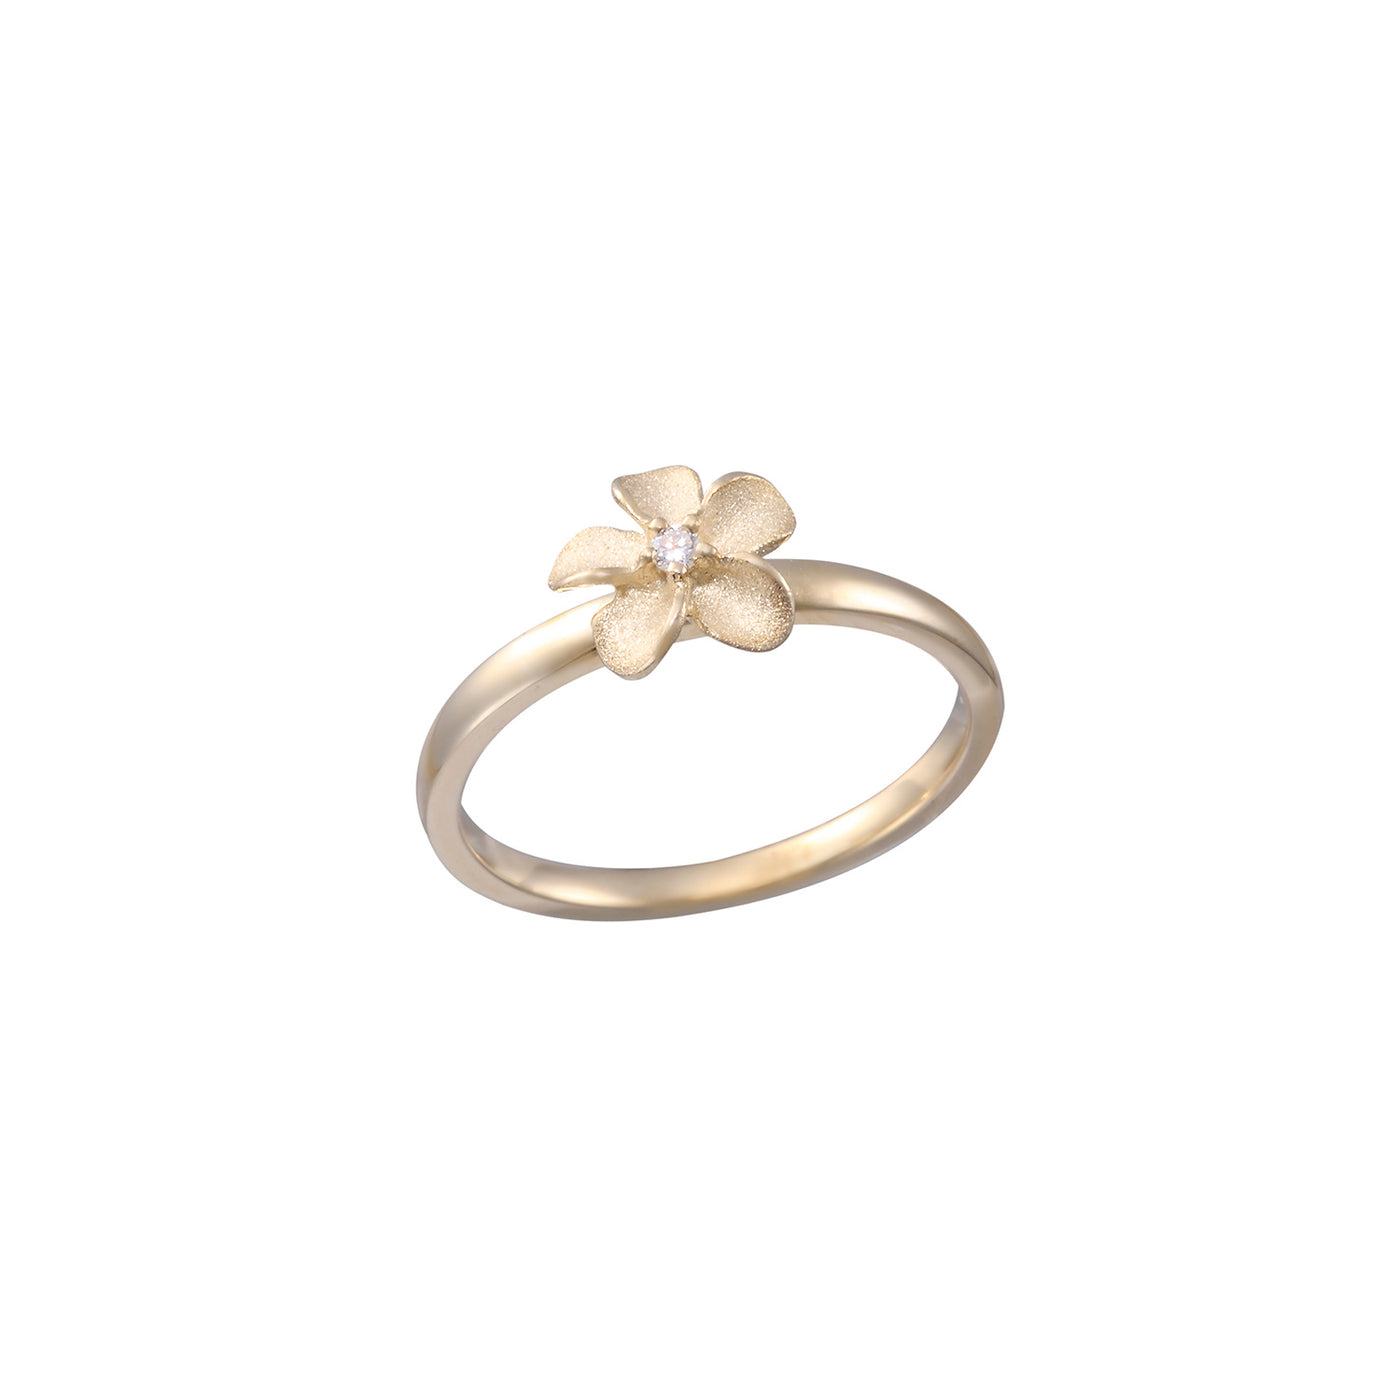 Denny Wong Designs 14k Yellow Gold Diamond Flower Ring – FRP-08SD2